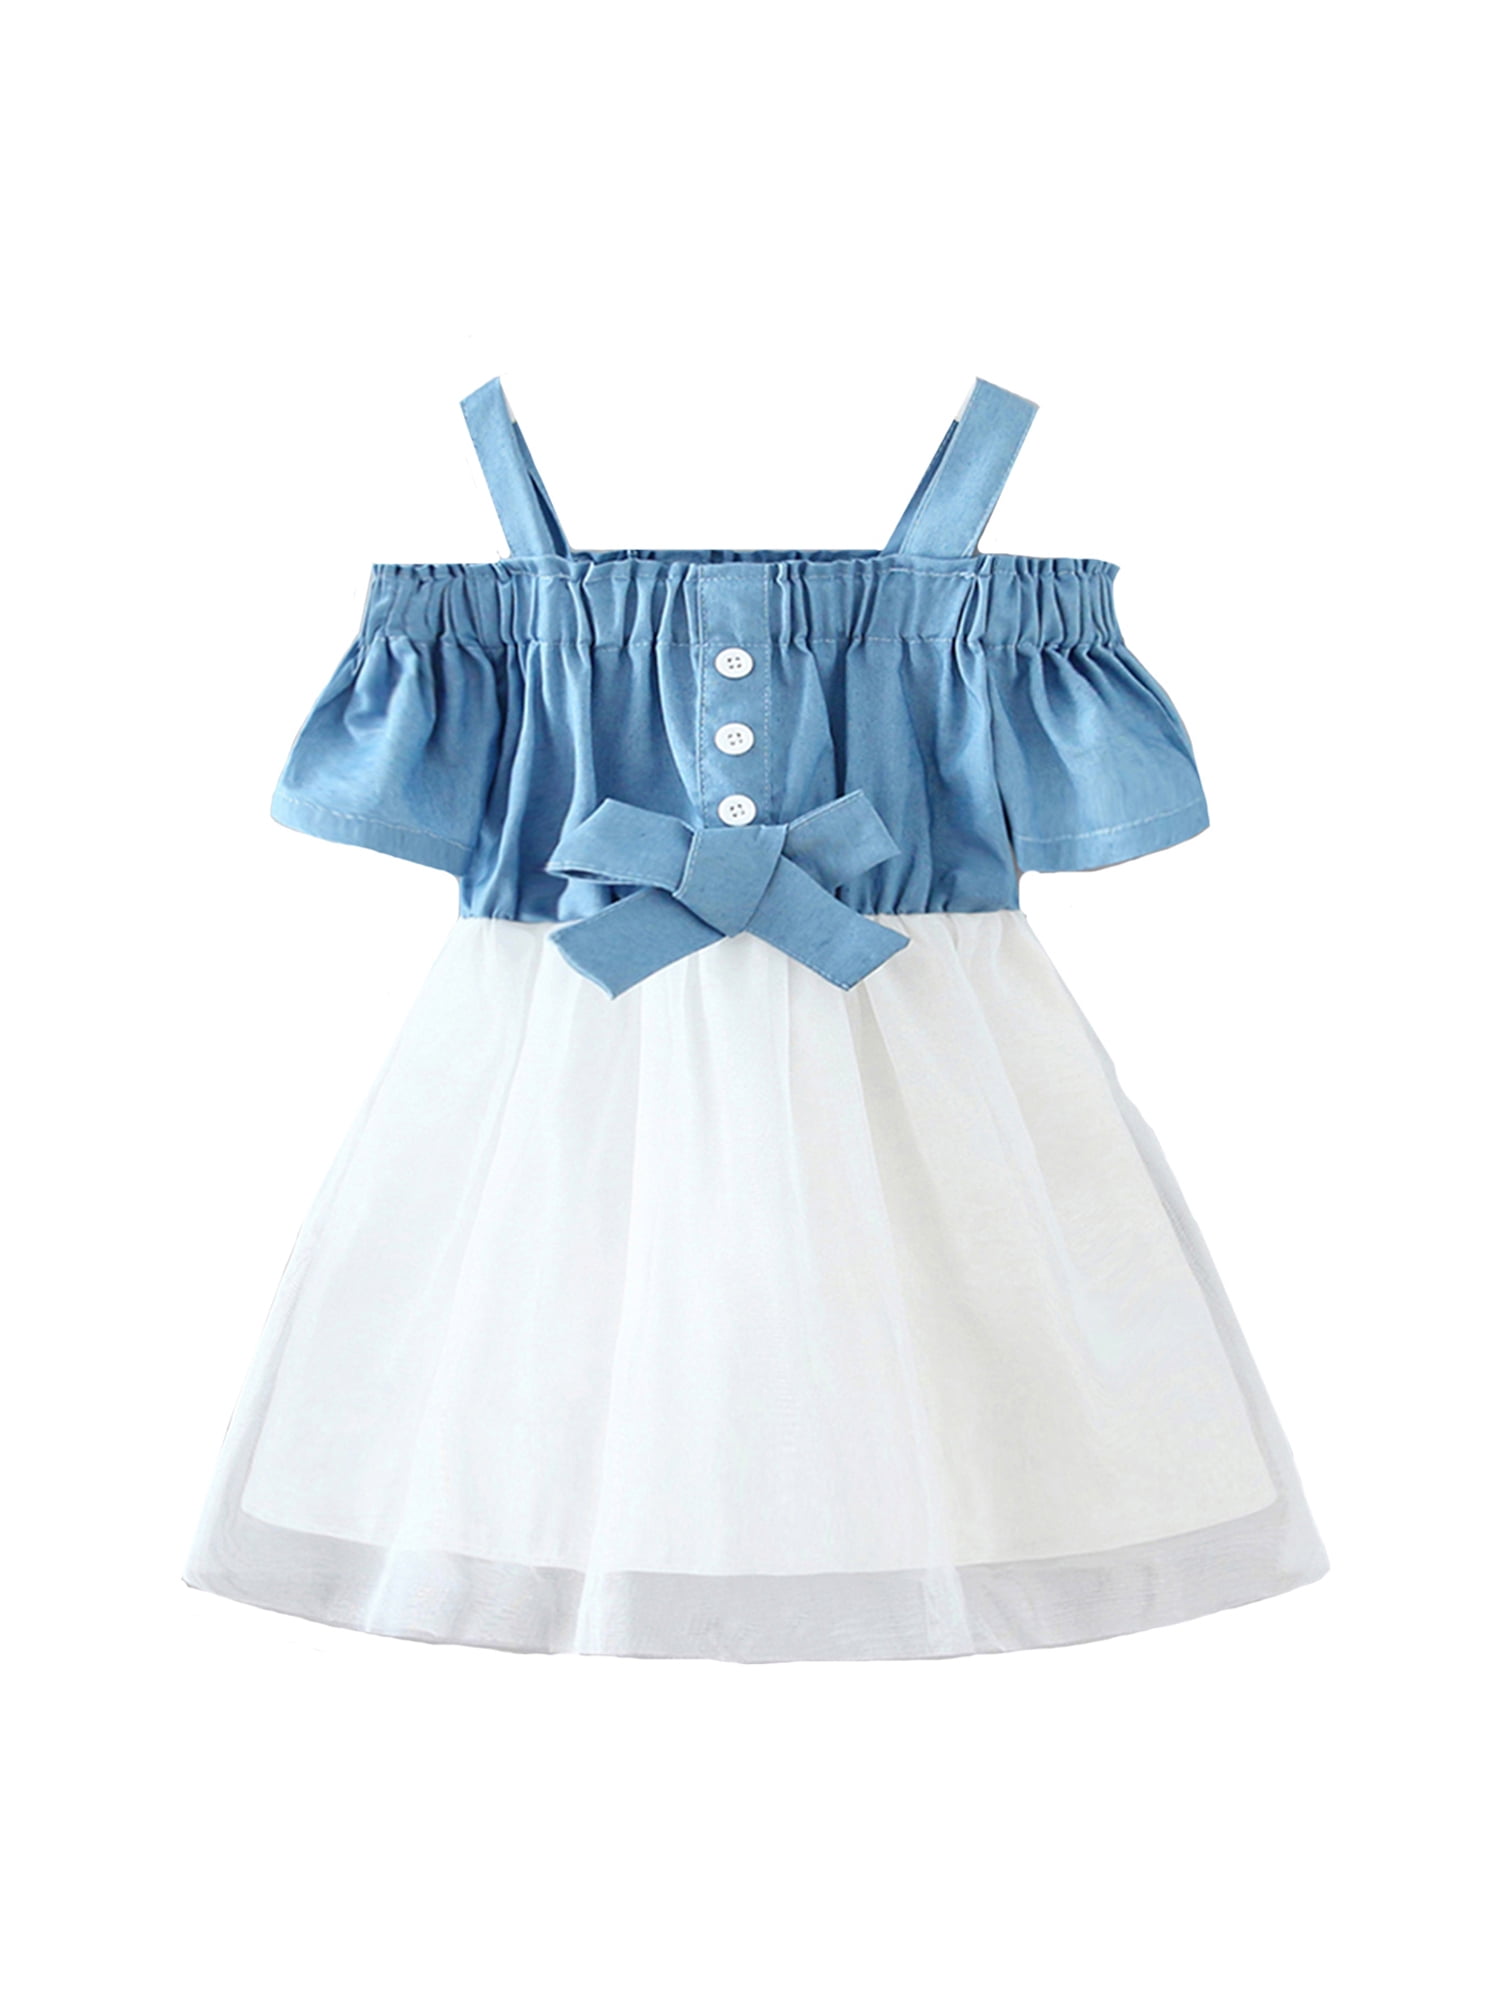 Details about   Minnie Mouse Toddler Girls Tutu  Dress & Headband Size 4T 